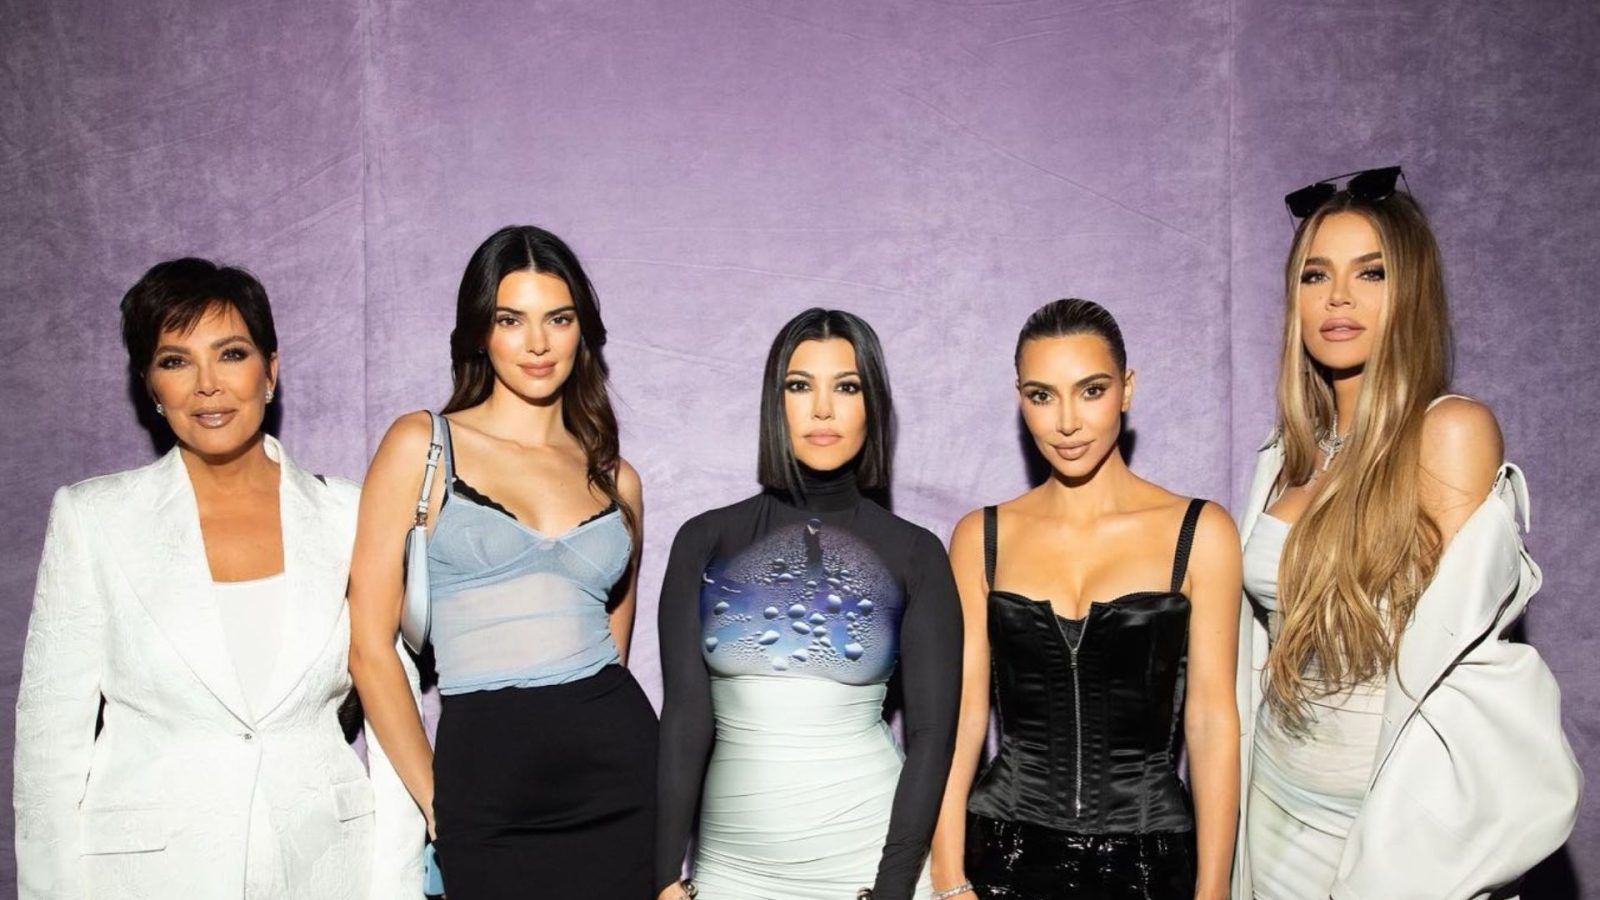 Rob Kardashian's Net Worth